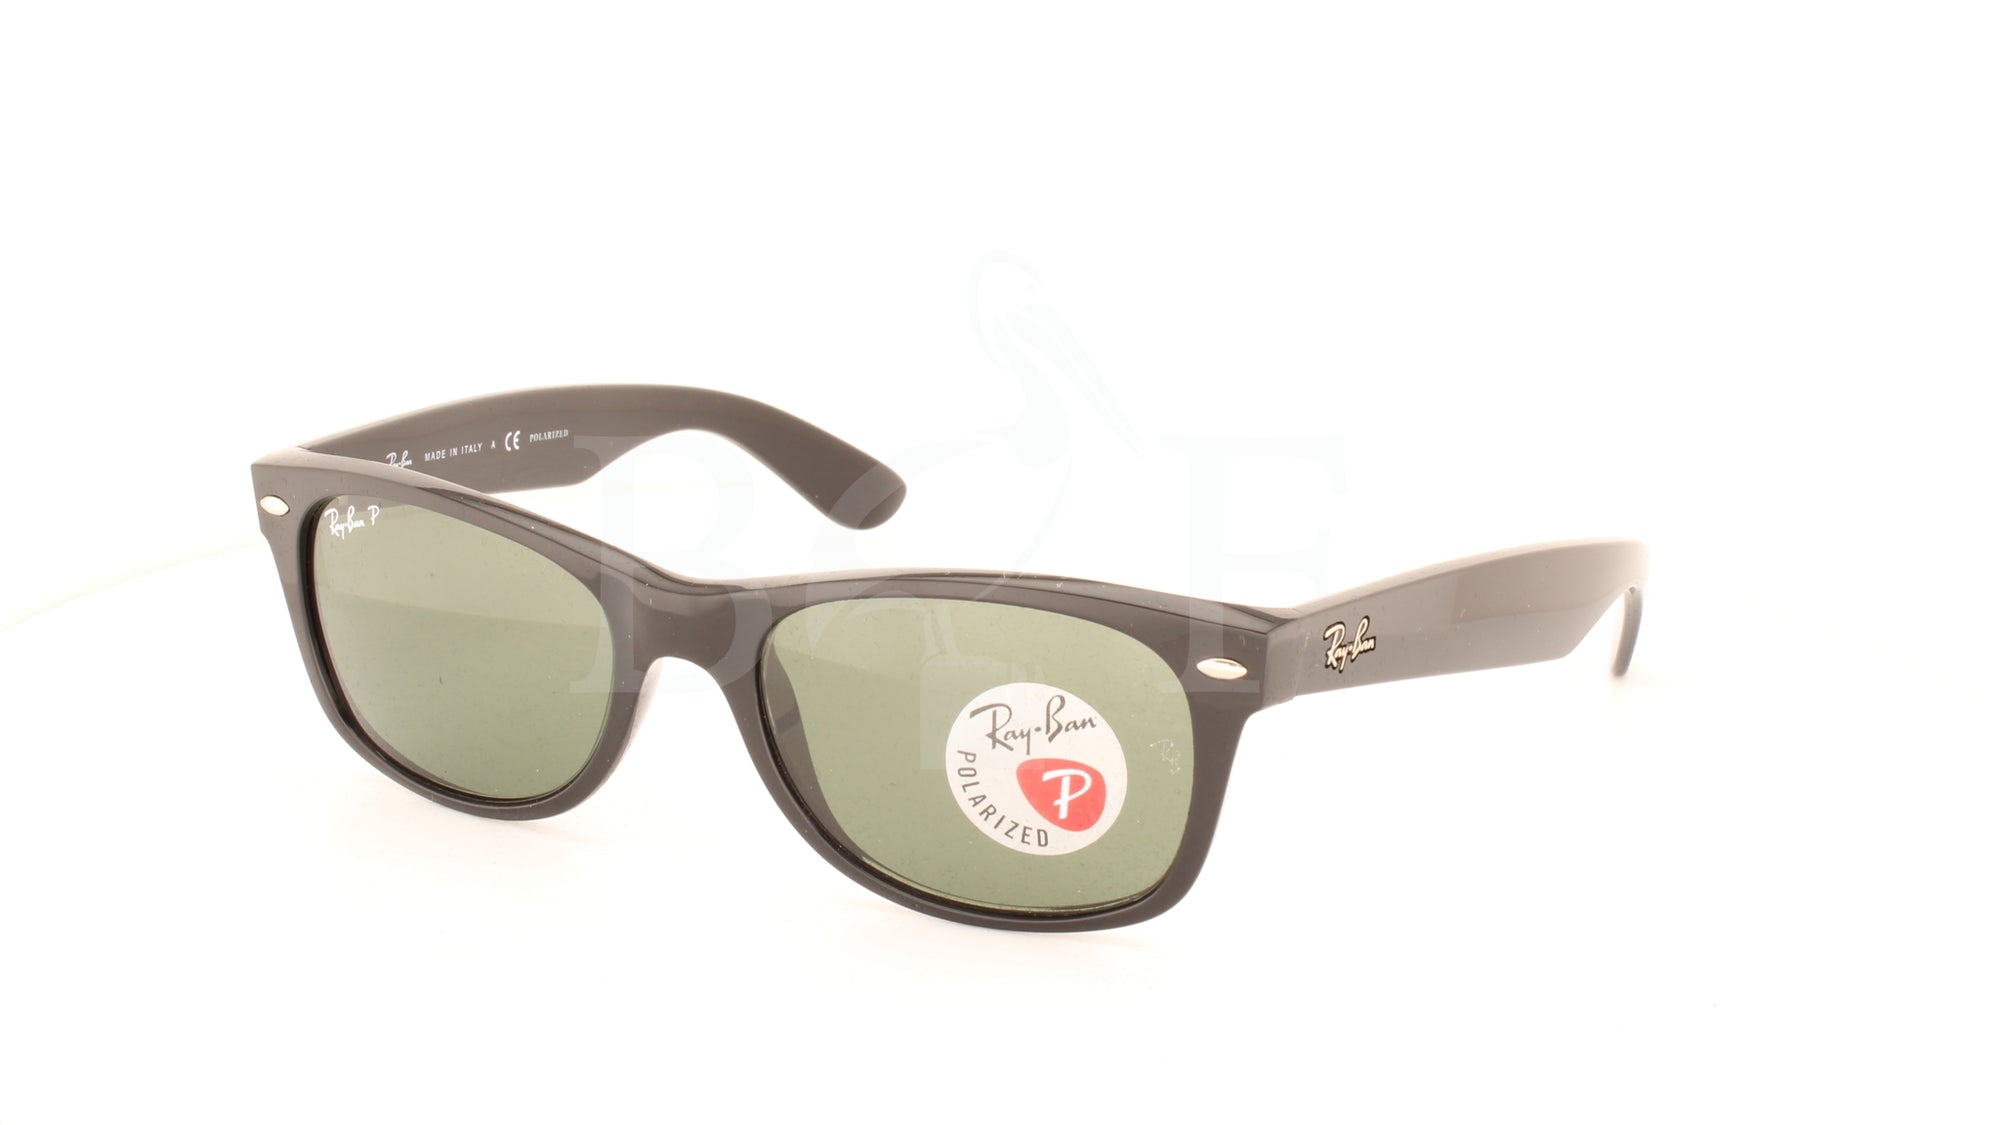 Sunglasses Ray Ban New Wayfarer Rb2132 901 58 Beachfitters Sunglass Shoppe